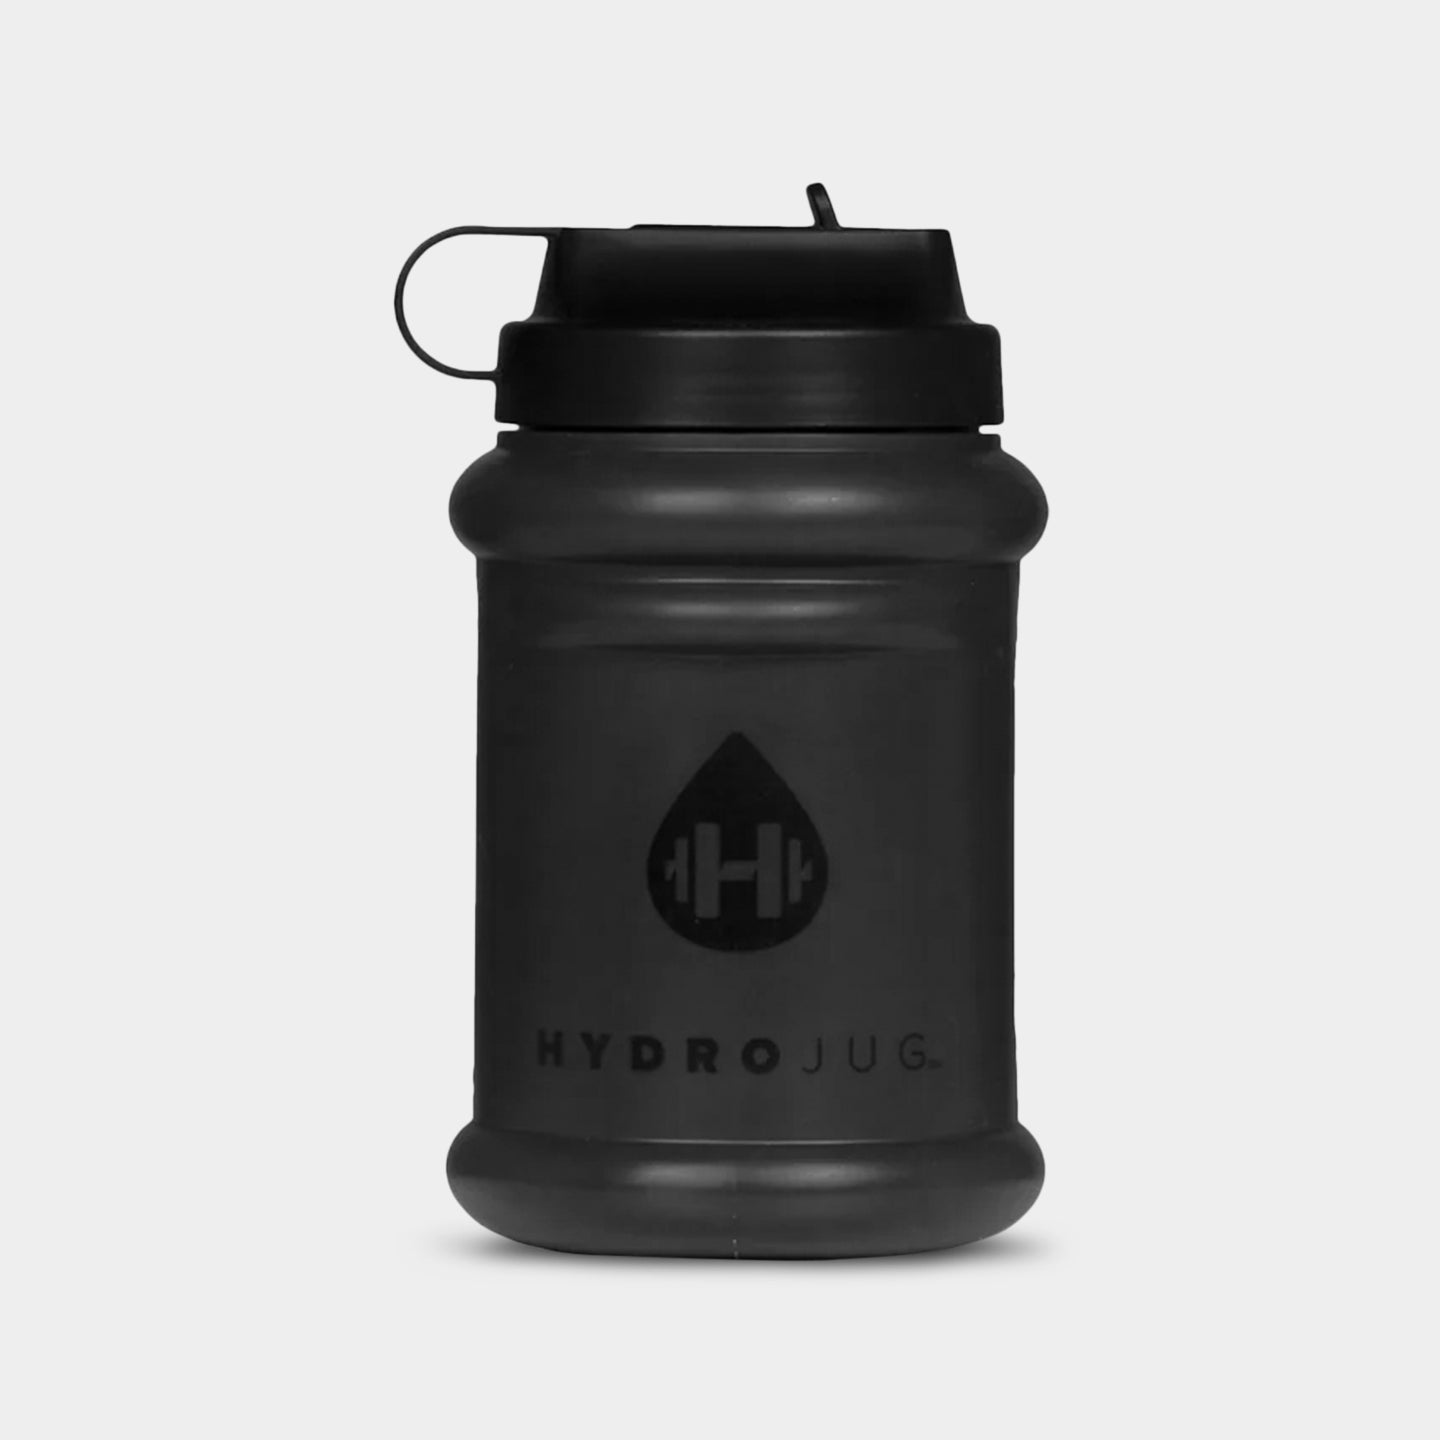 Hydro-Jug-Mini-Black32oz-main-grey